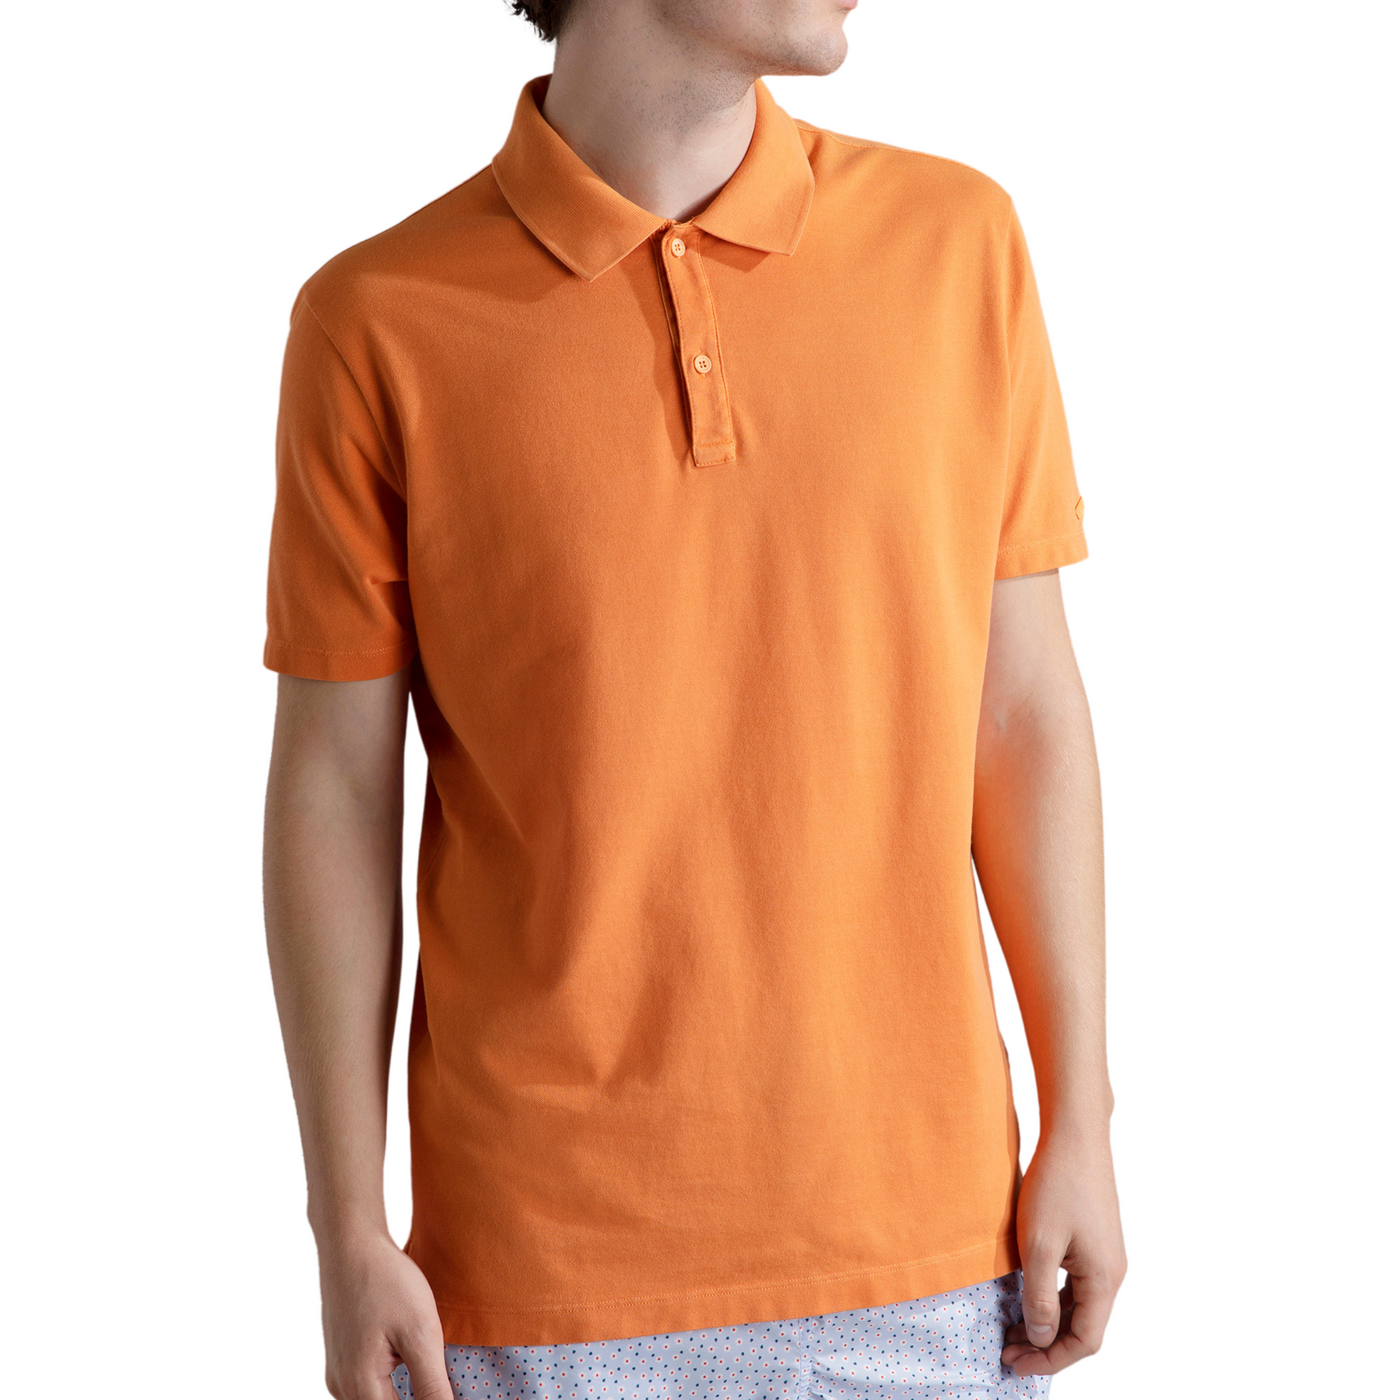 Paul & Shark Garment Dyed Poloshirt Orange